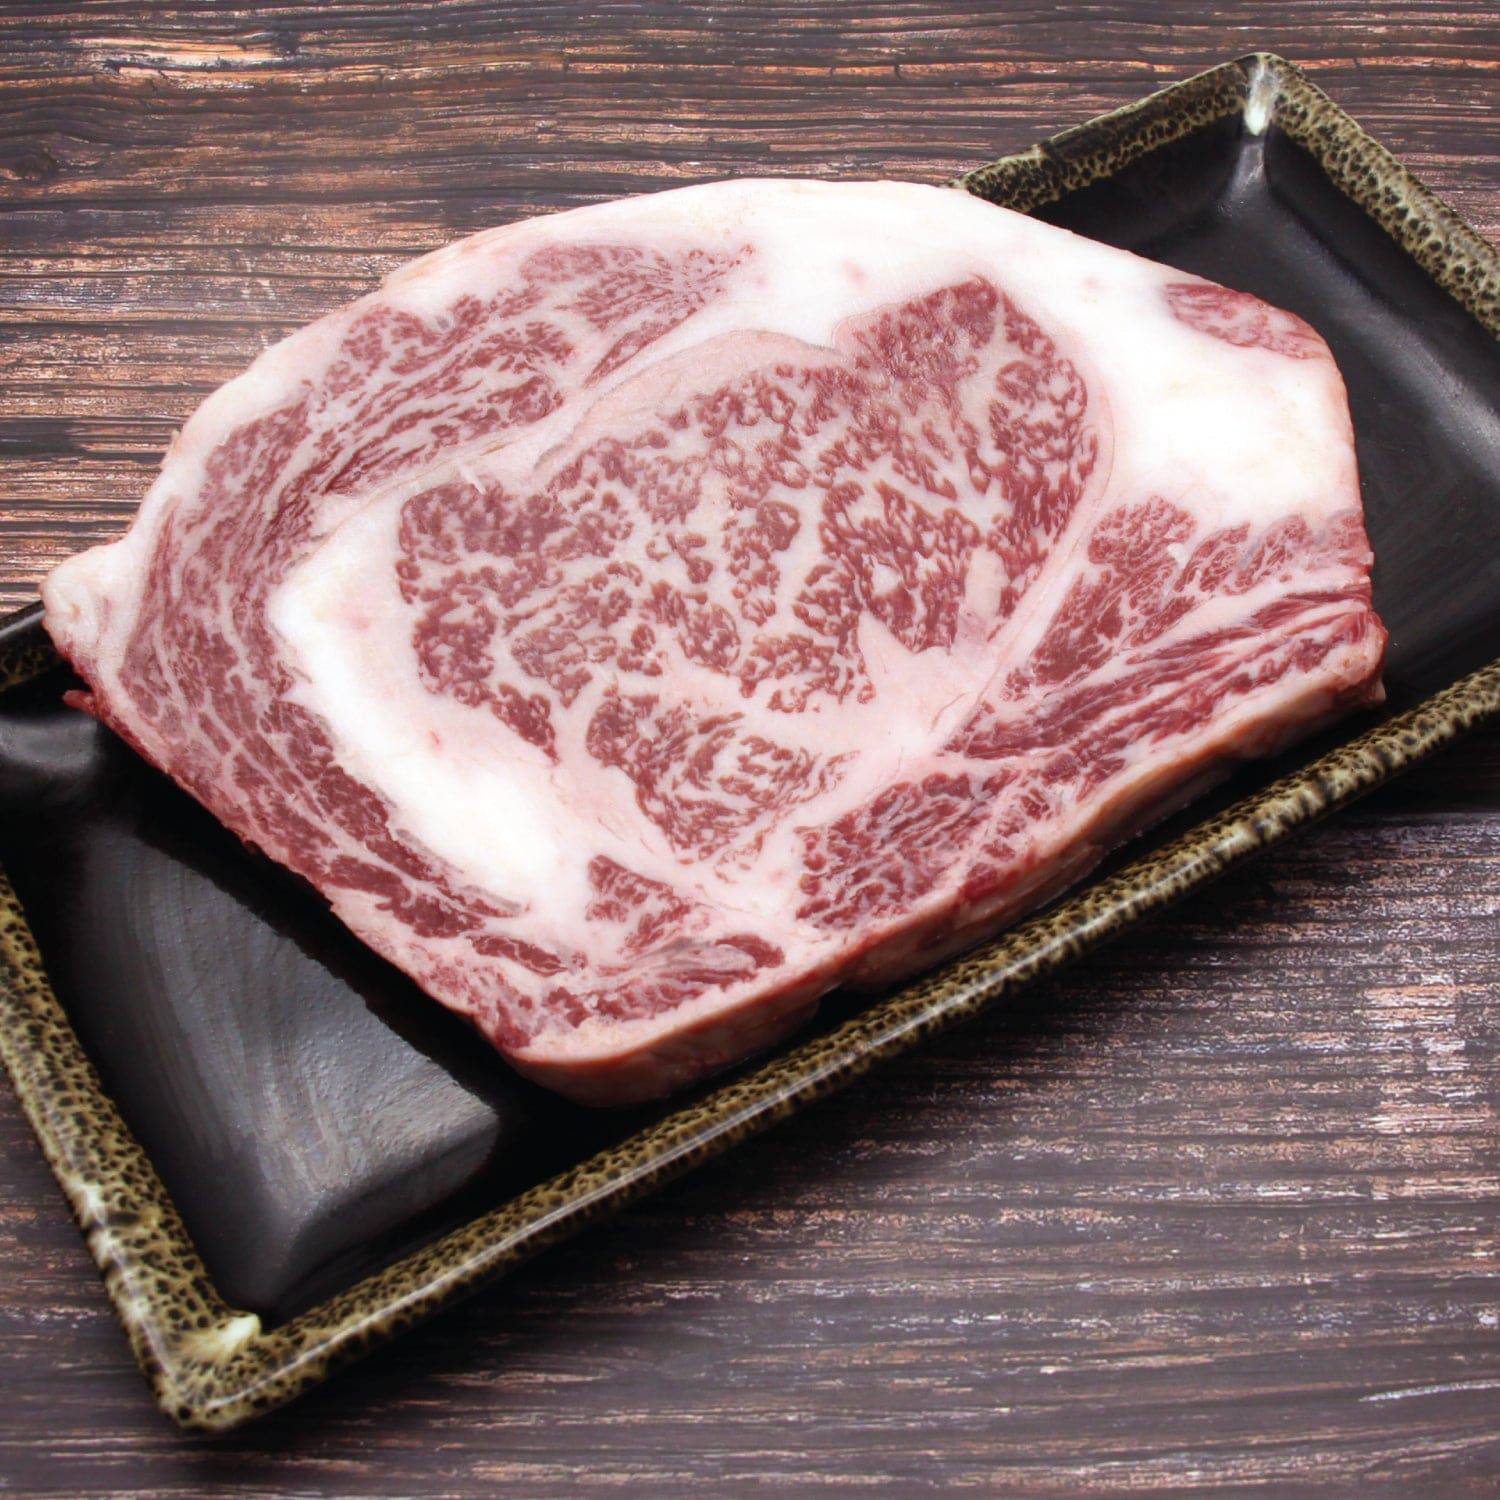 Kagoshima Wagyu A4 Ribeye Steak เนื้อคาโกชิมาวากิว ริบอาย A4 ตัดสเต็ค - The Foodworks 